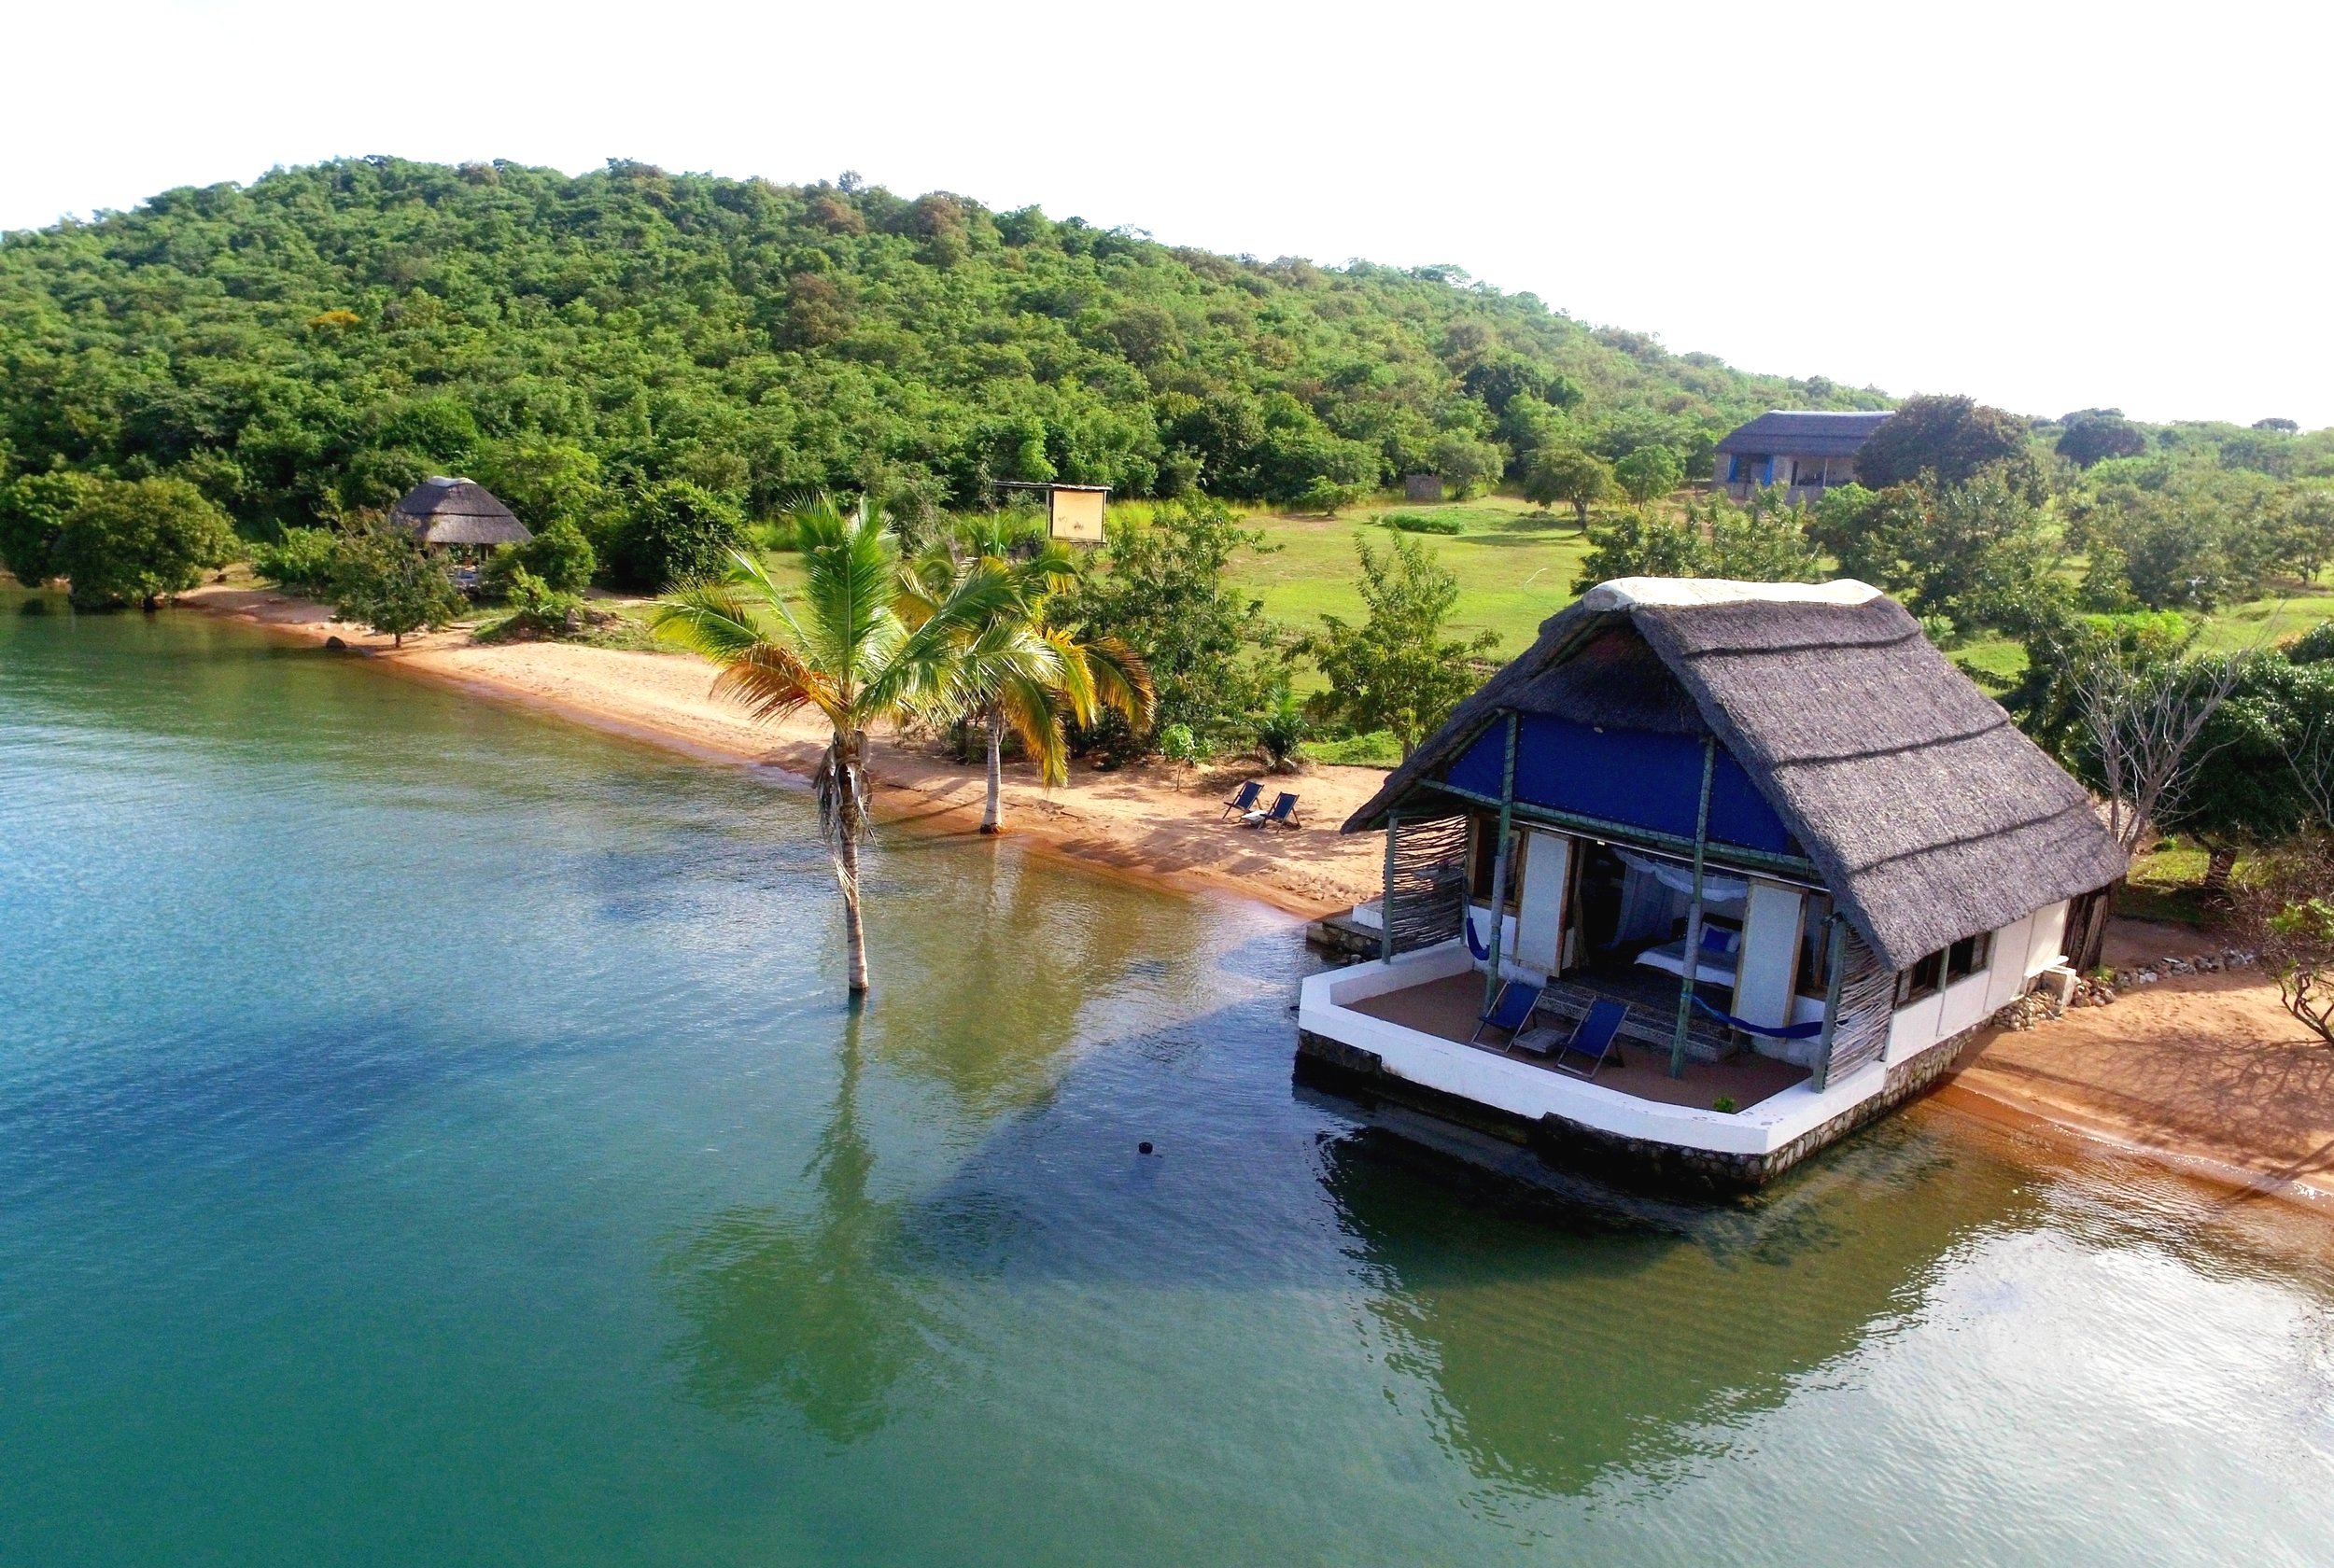 Lake Shore Lodge Tz - Lake Tanganyika - Chalet 6 from the air for website 2022.JPG